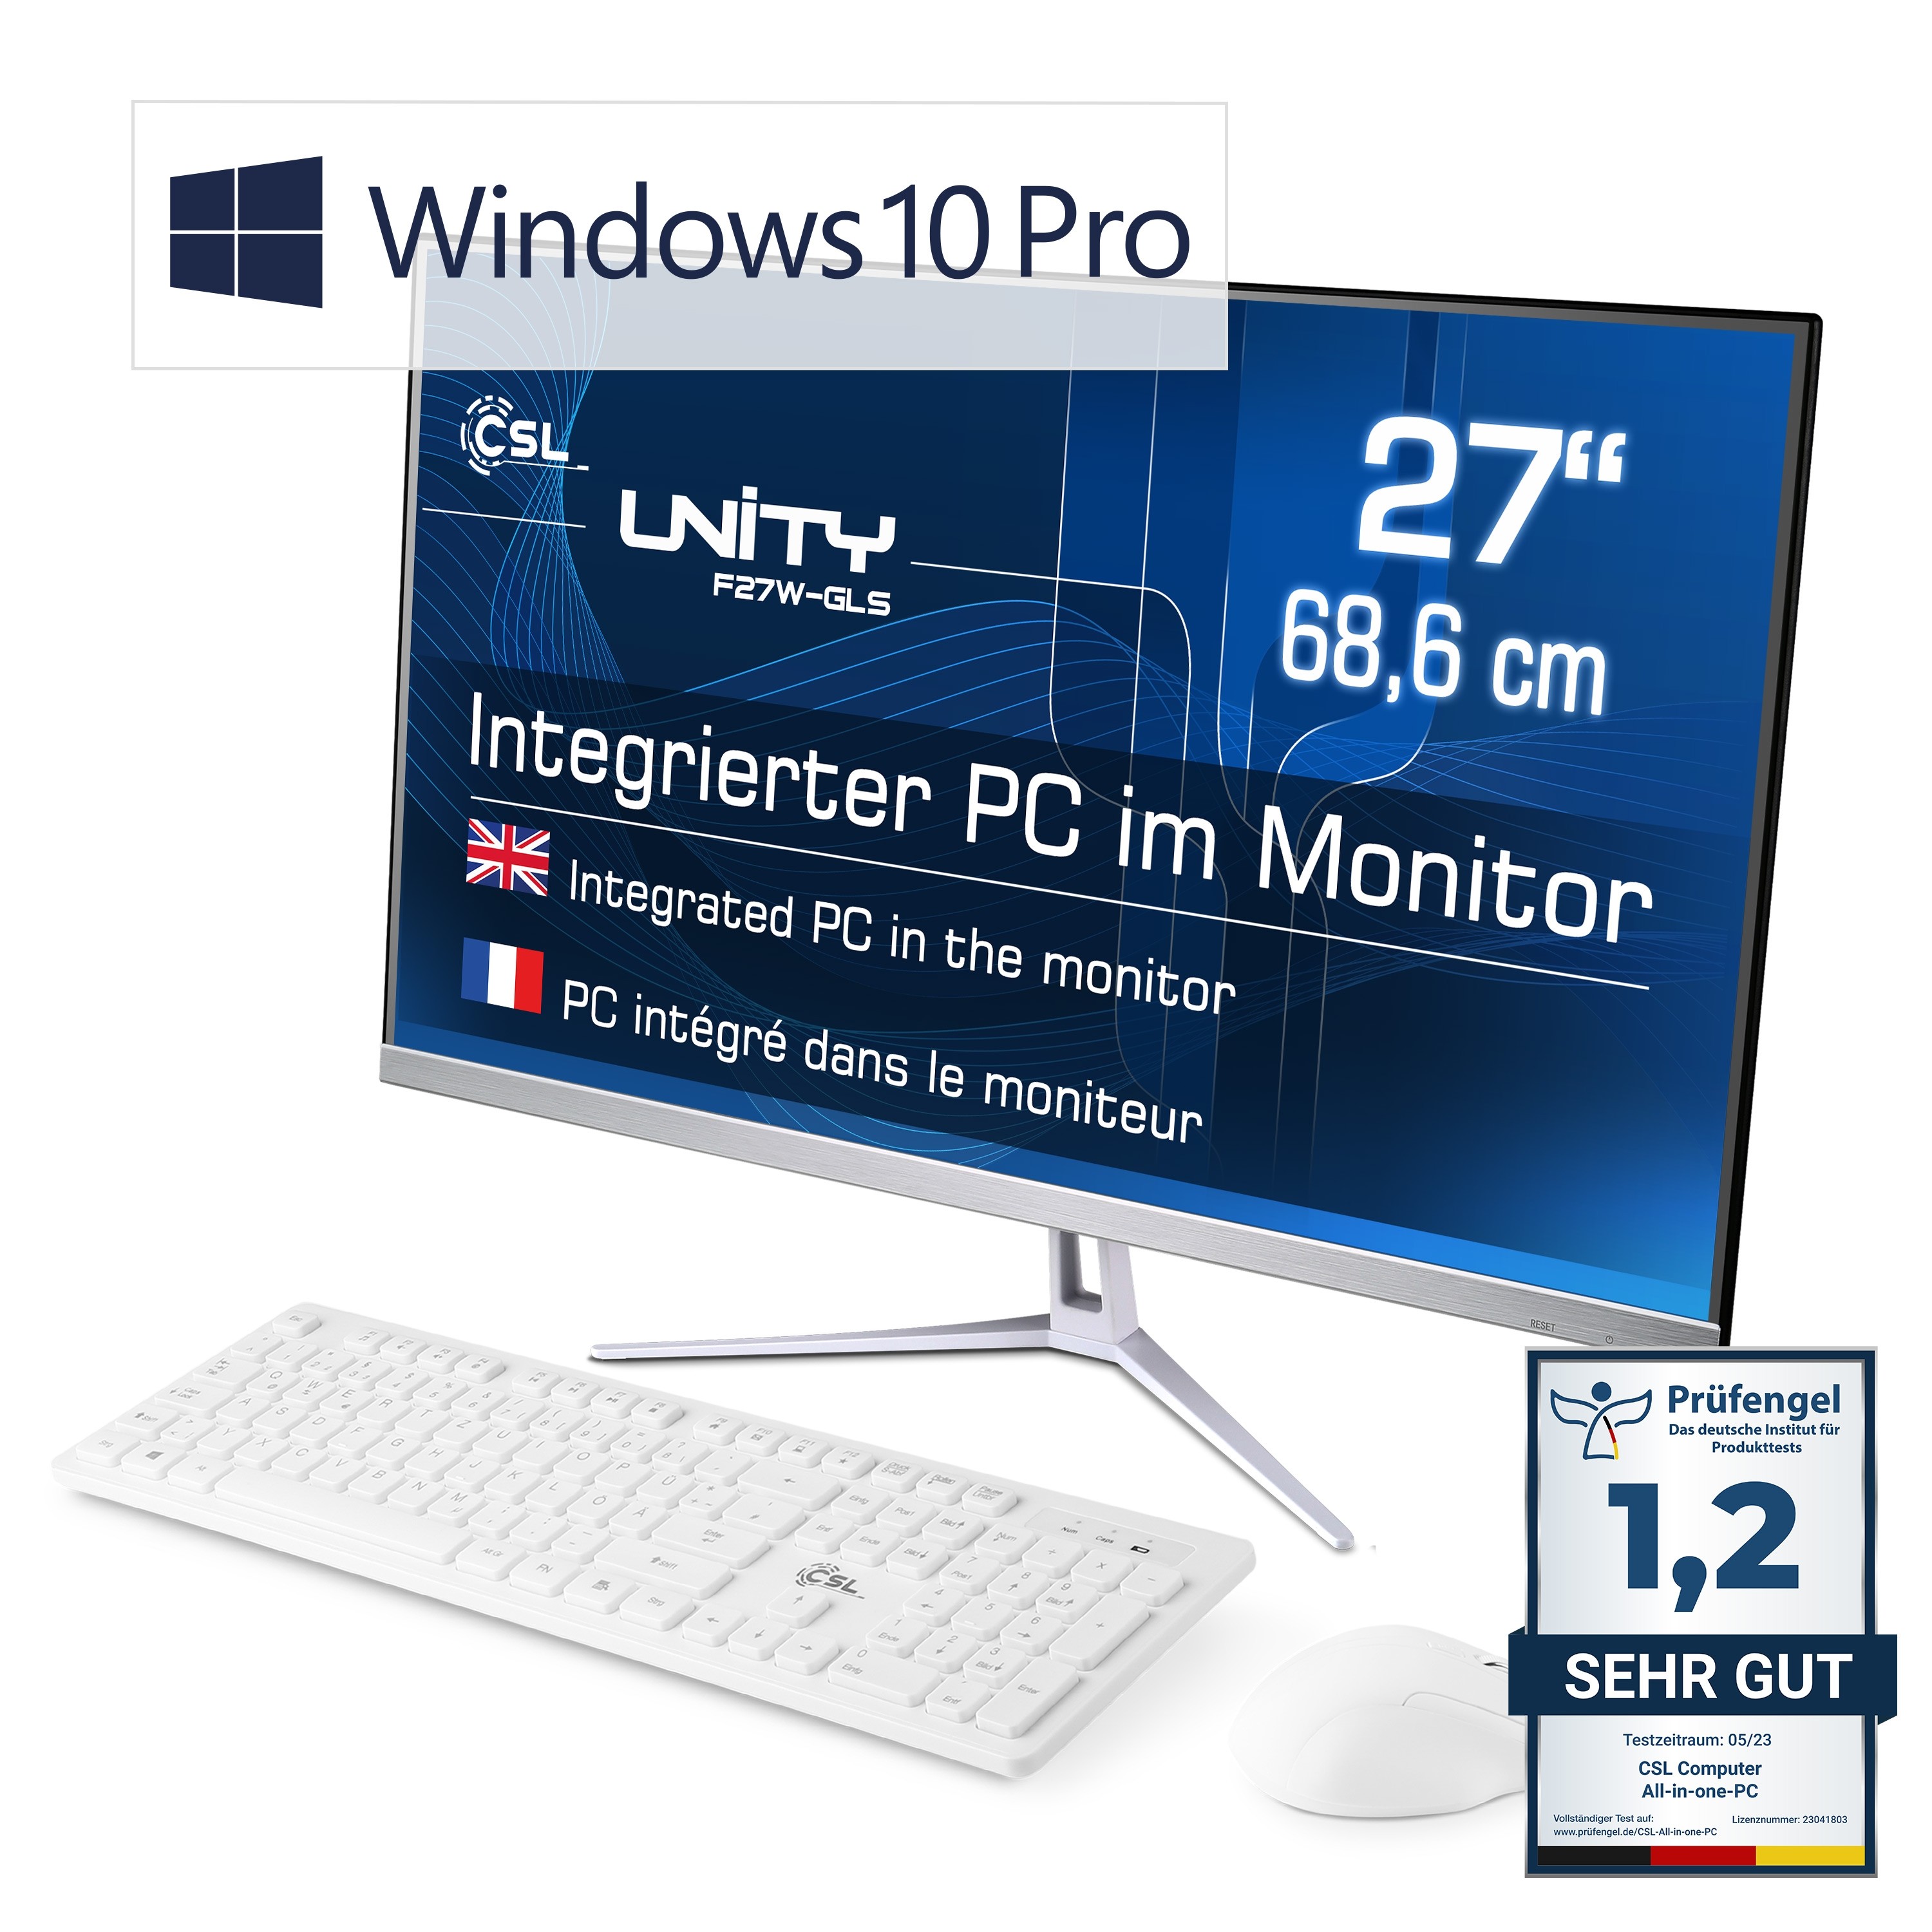 CSL Computer | All-in-One-PC CSL RAM Unity Pentium 10 / Windows 512 / GB 16 / Pro F27W-JLS GB